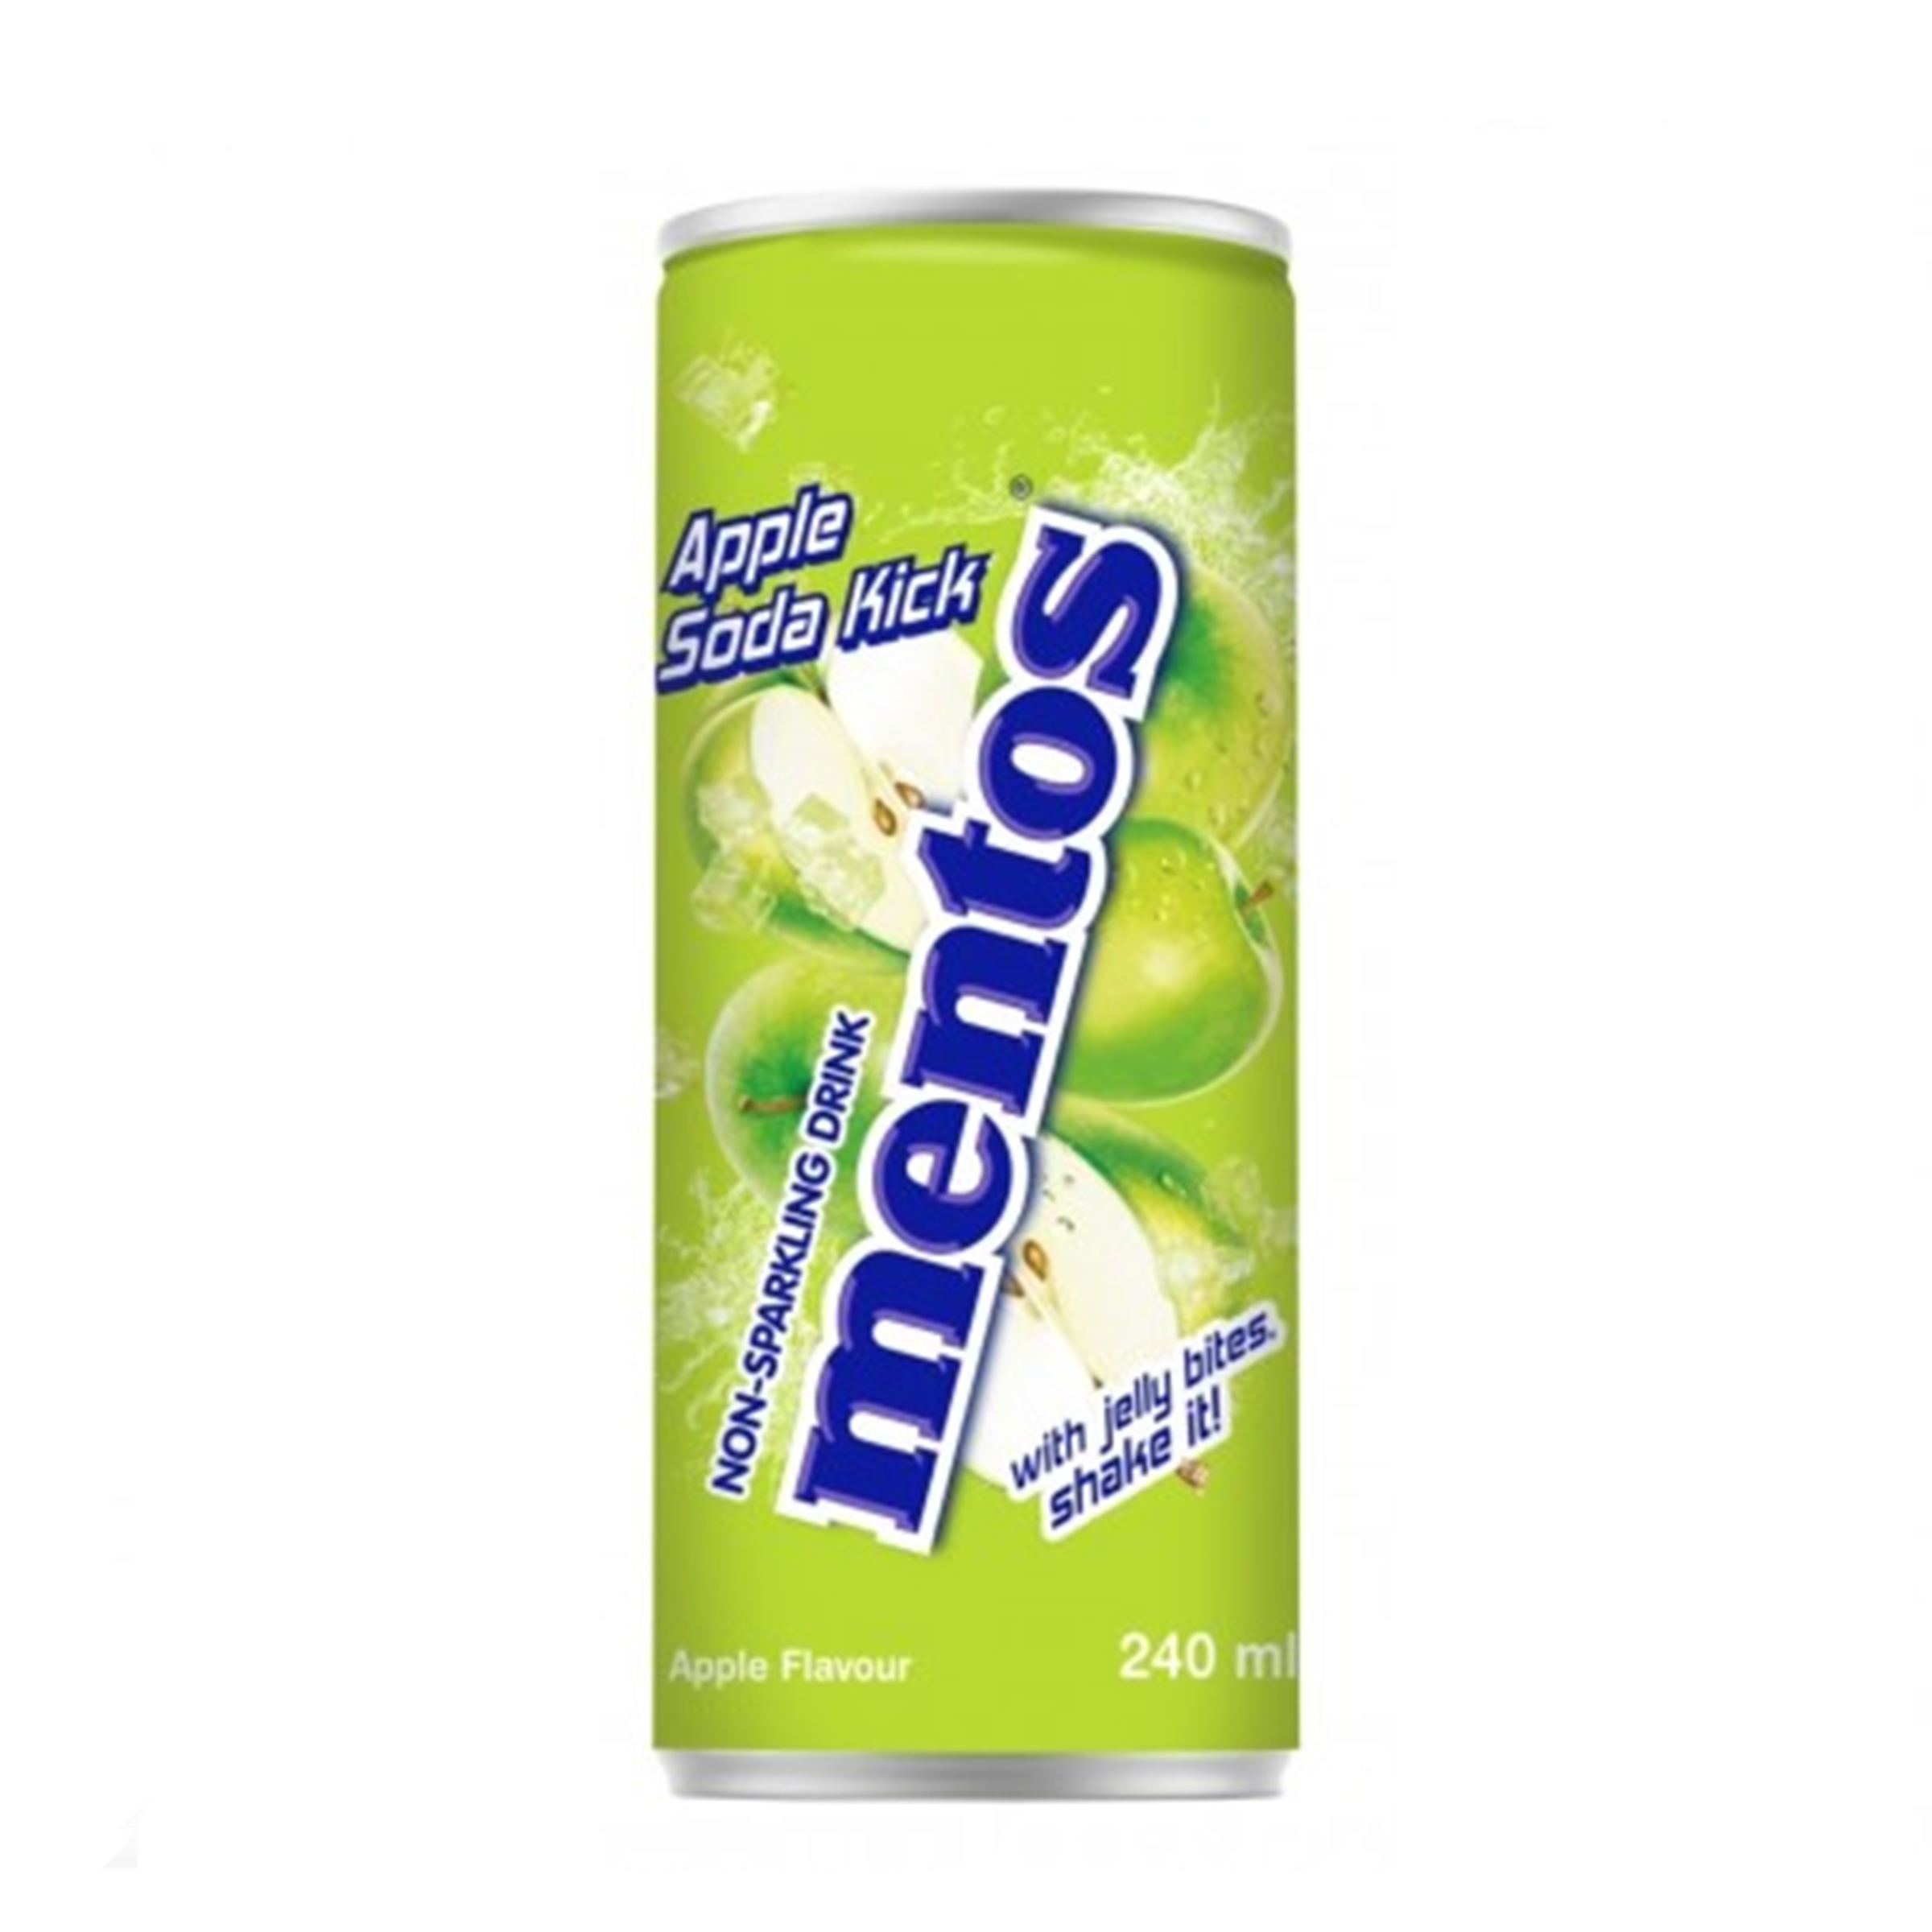 Mentos Drink - Apple Soda Kick (Korea)